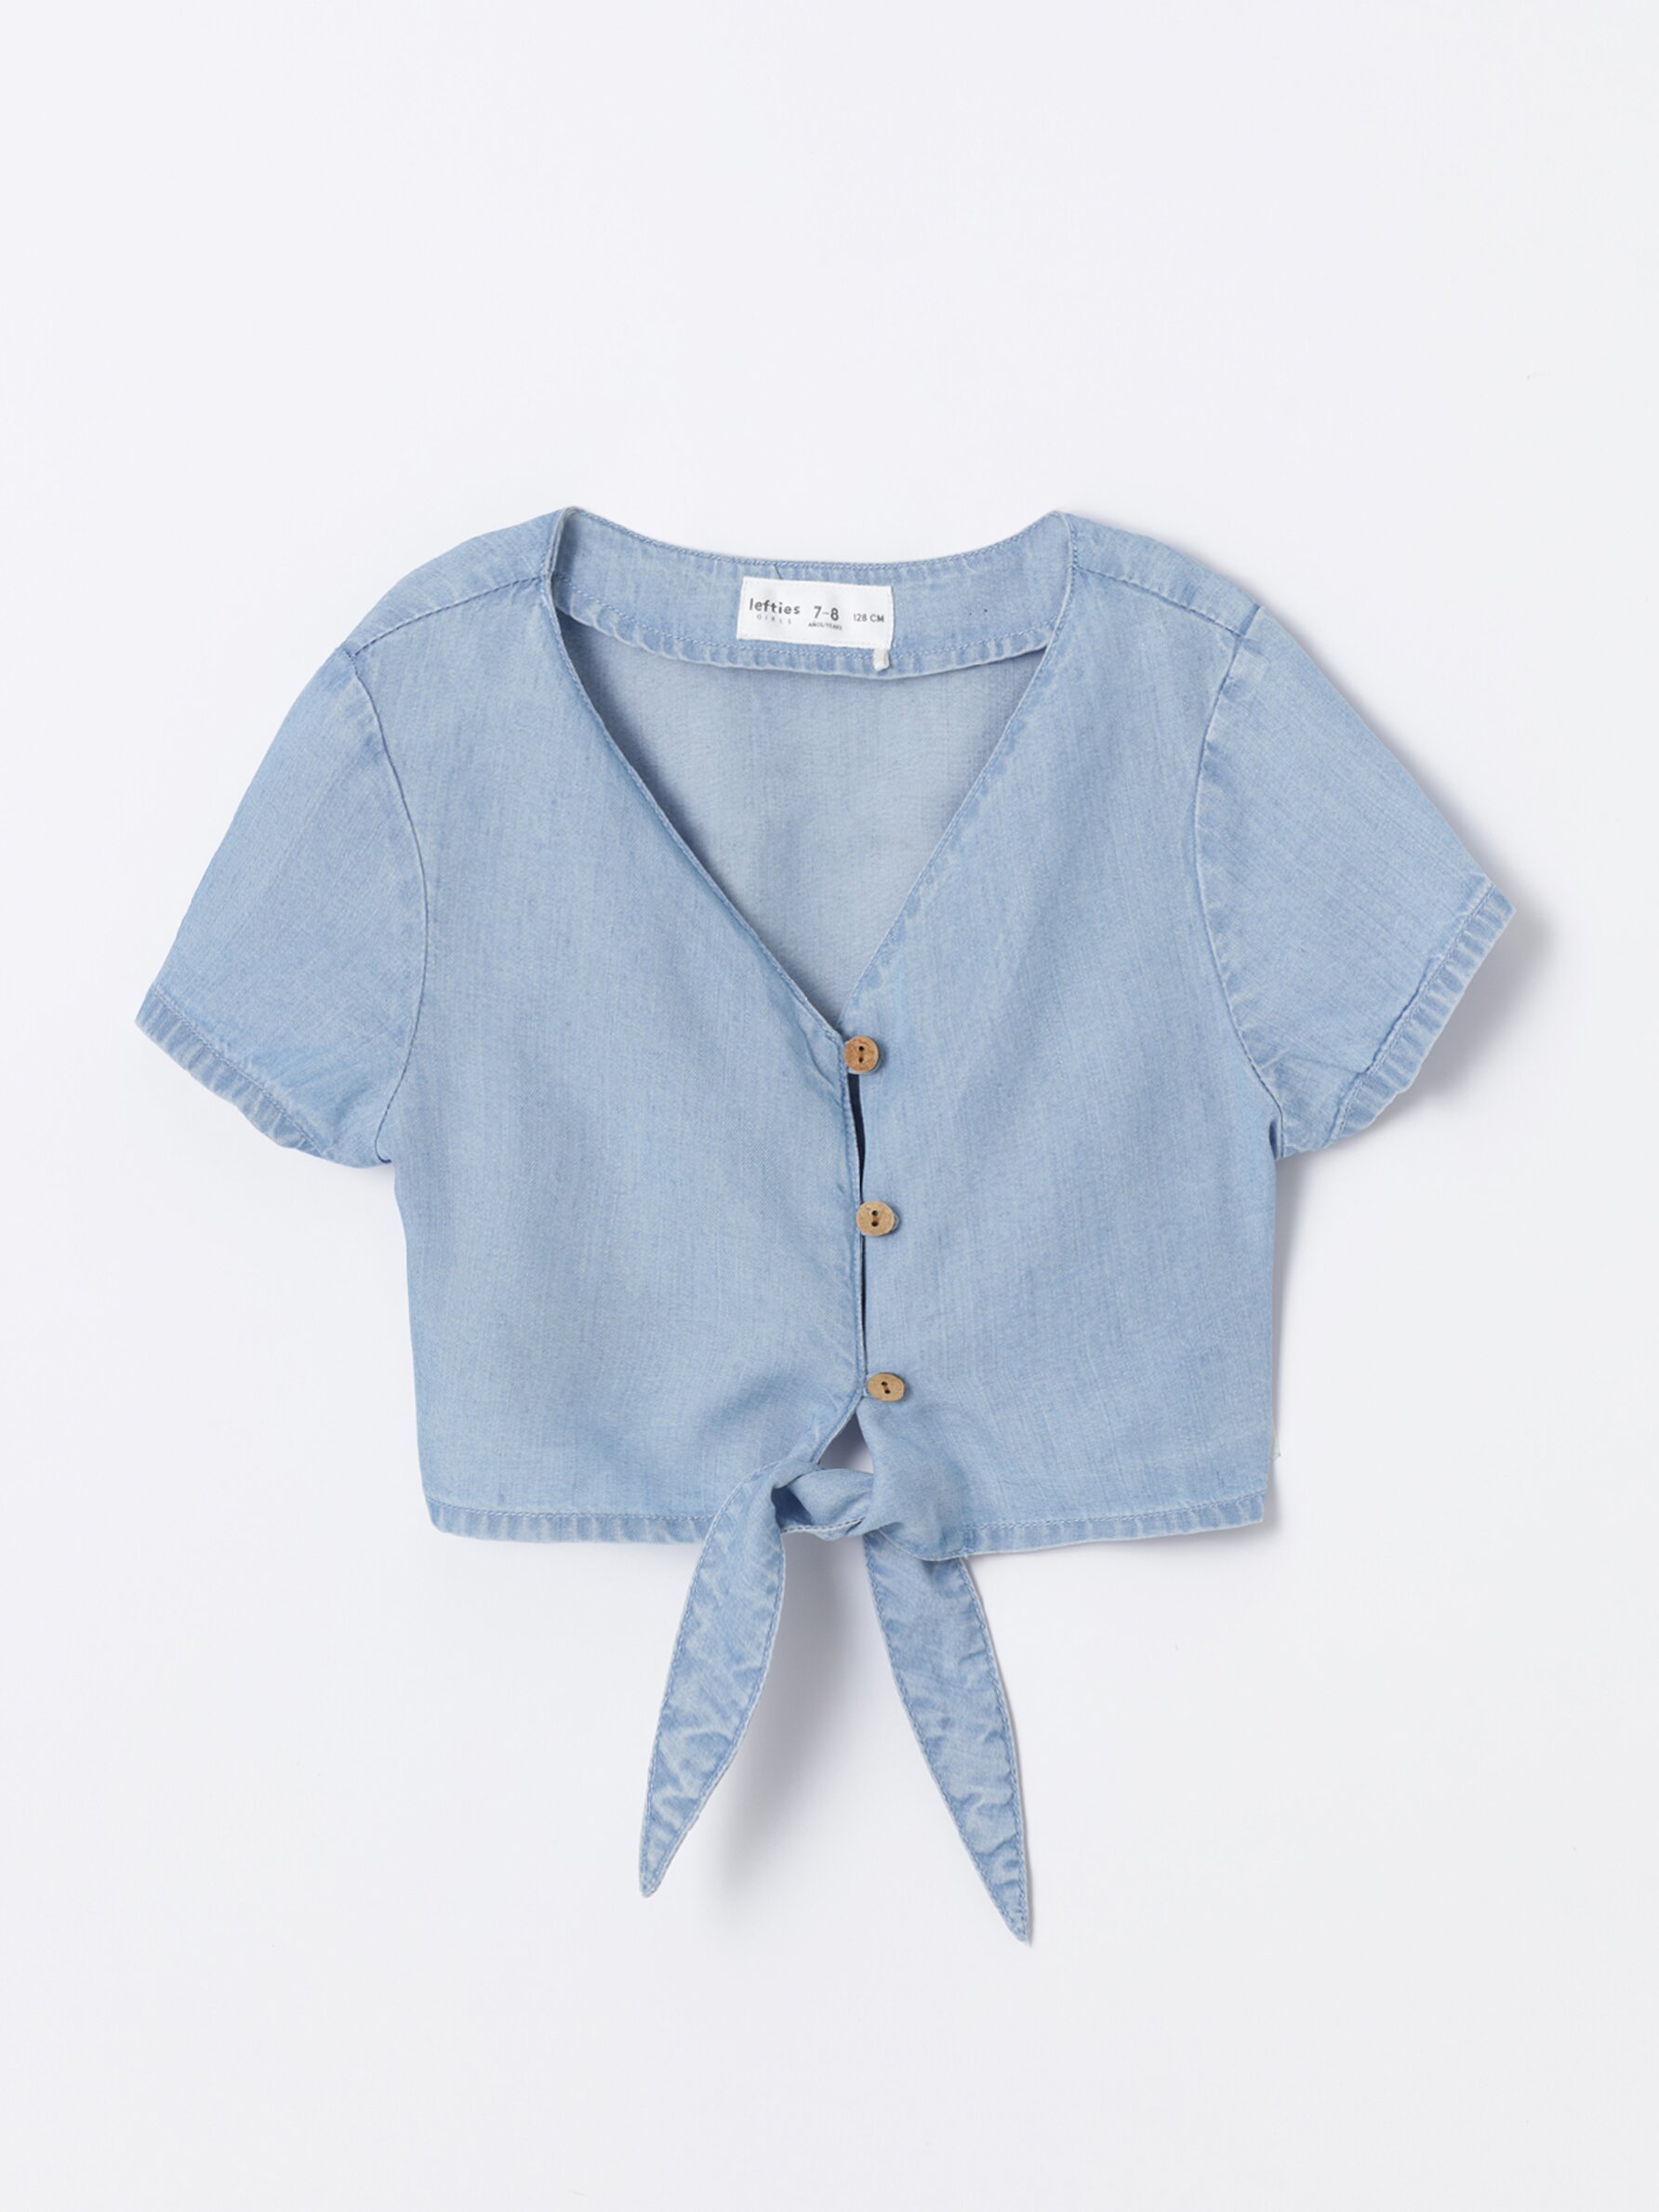 J. Jill Denim Knot Button Down Shirt Women's Size XS | eBay